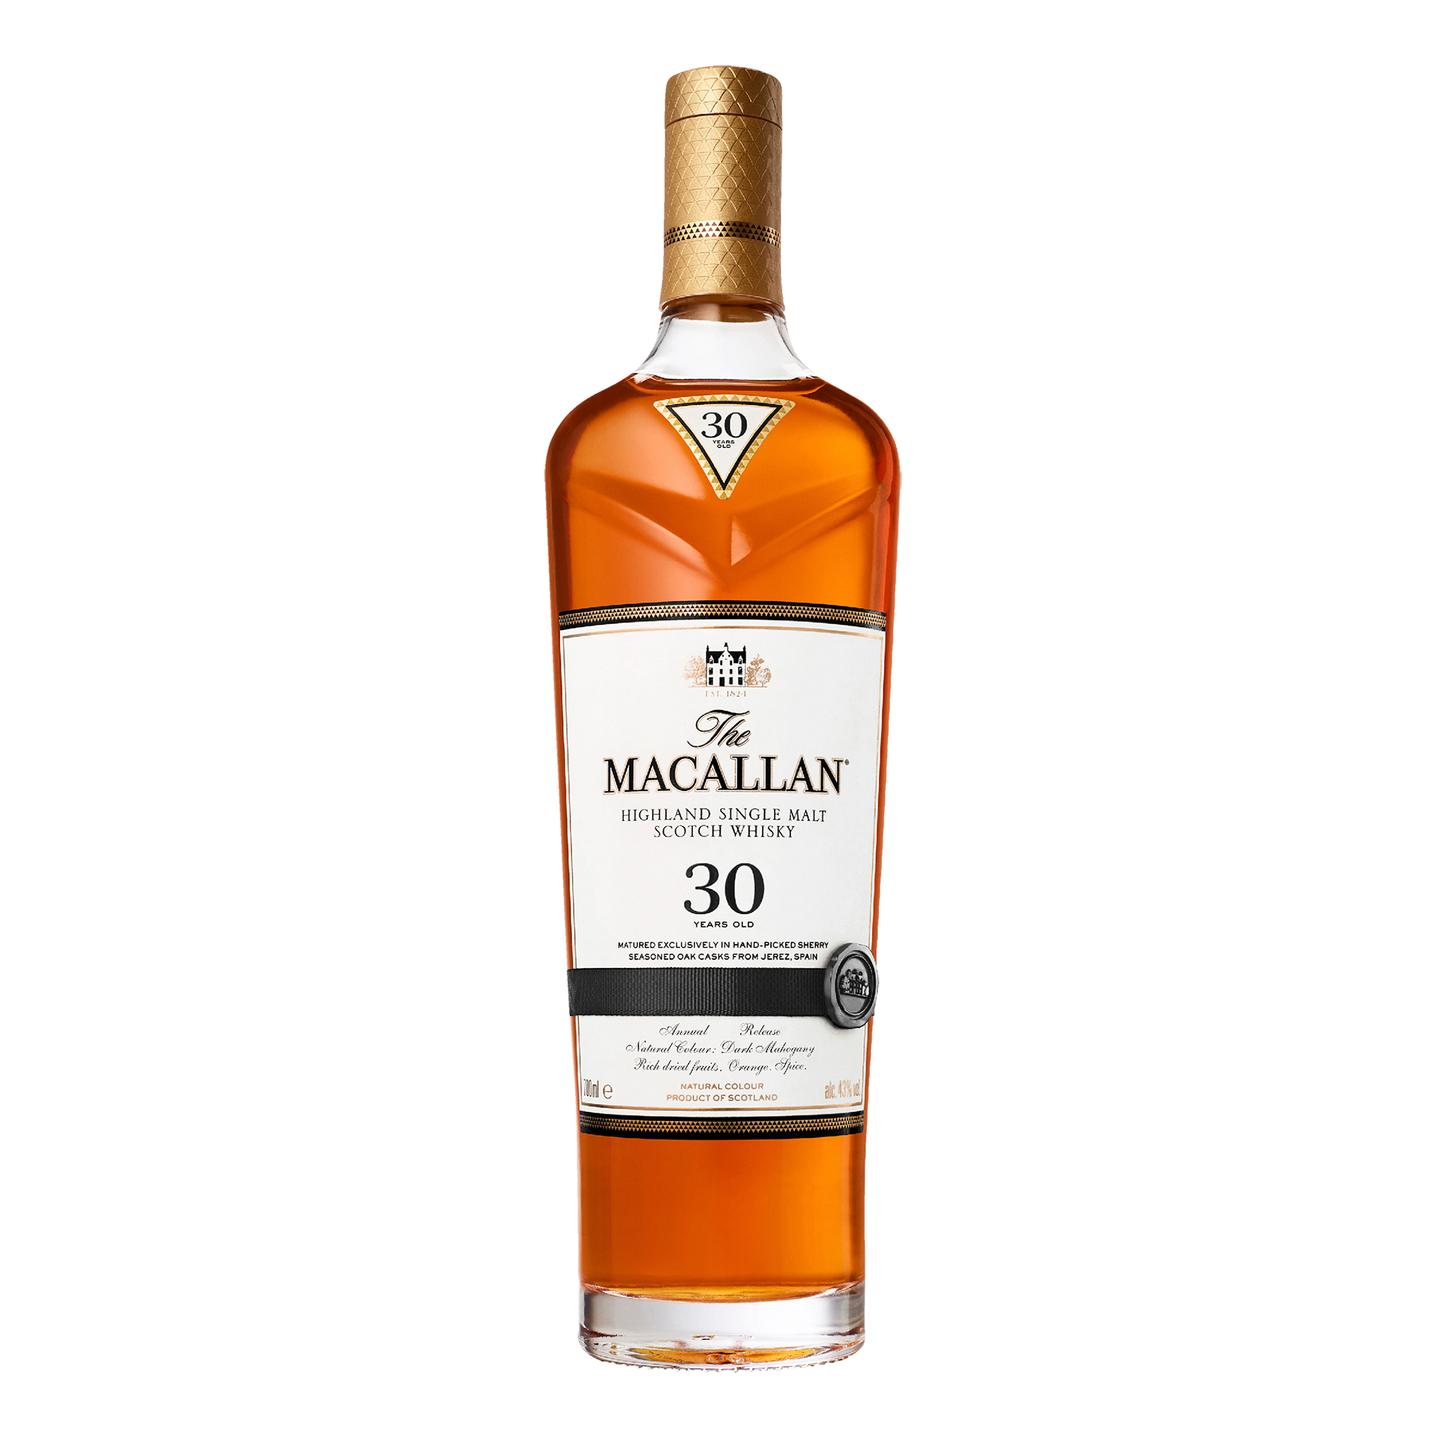 The Macallan Sherry Oak 30 Years Old Single Malt Scotch Whisky 700ml (2021 Release)